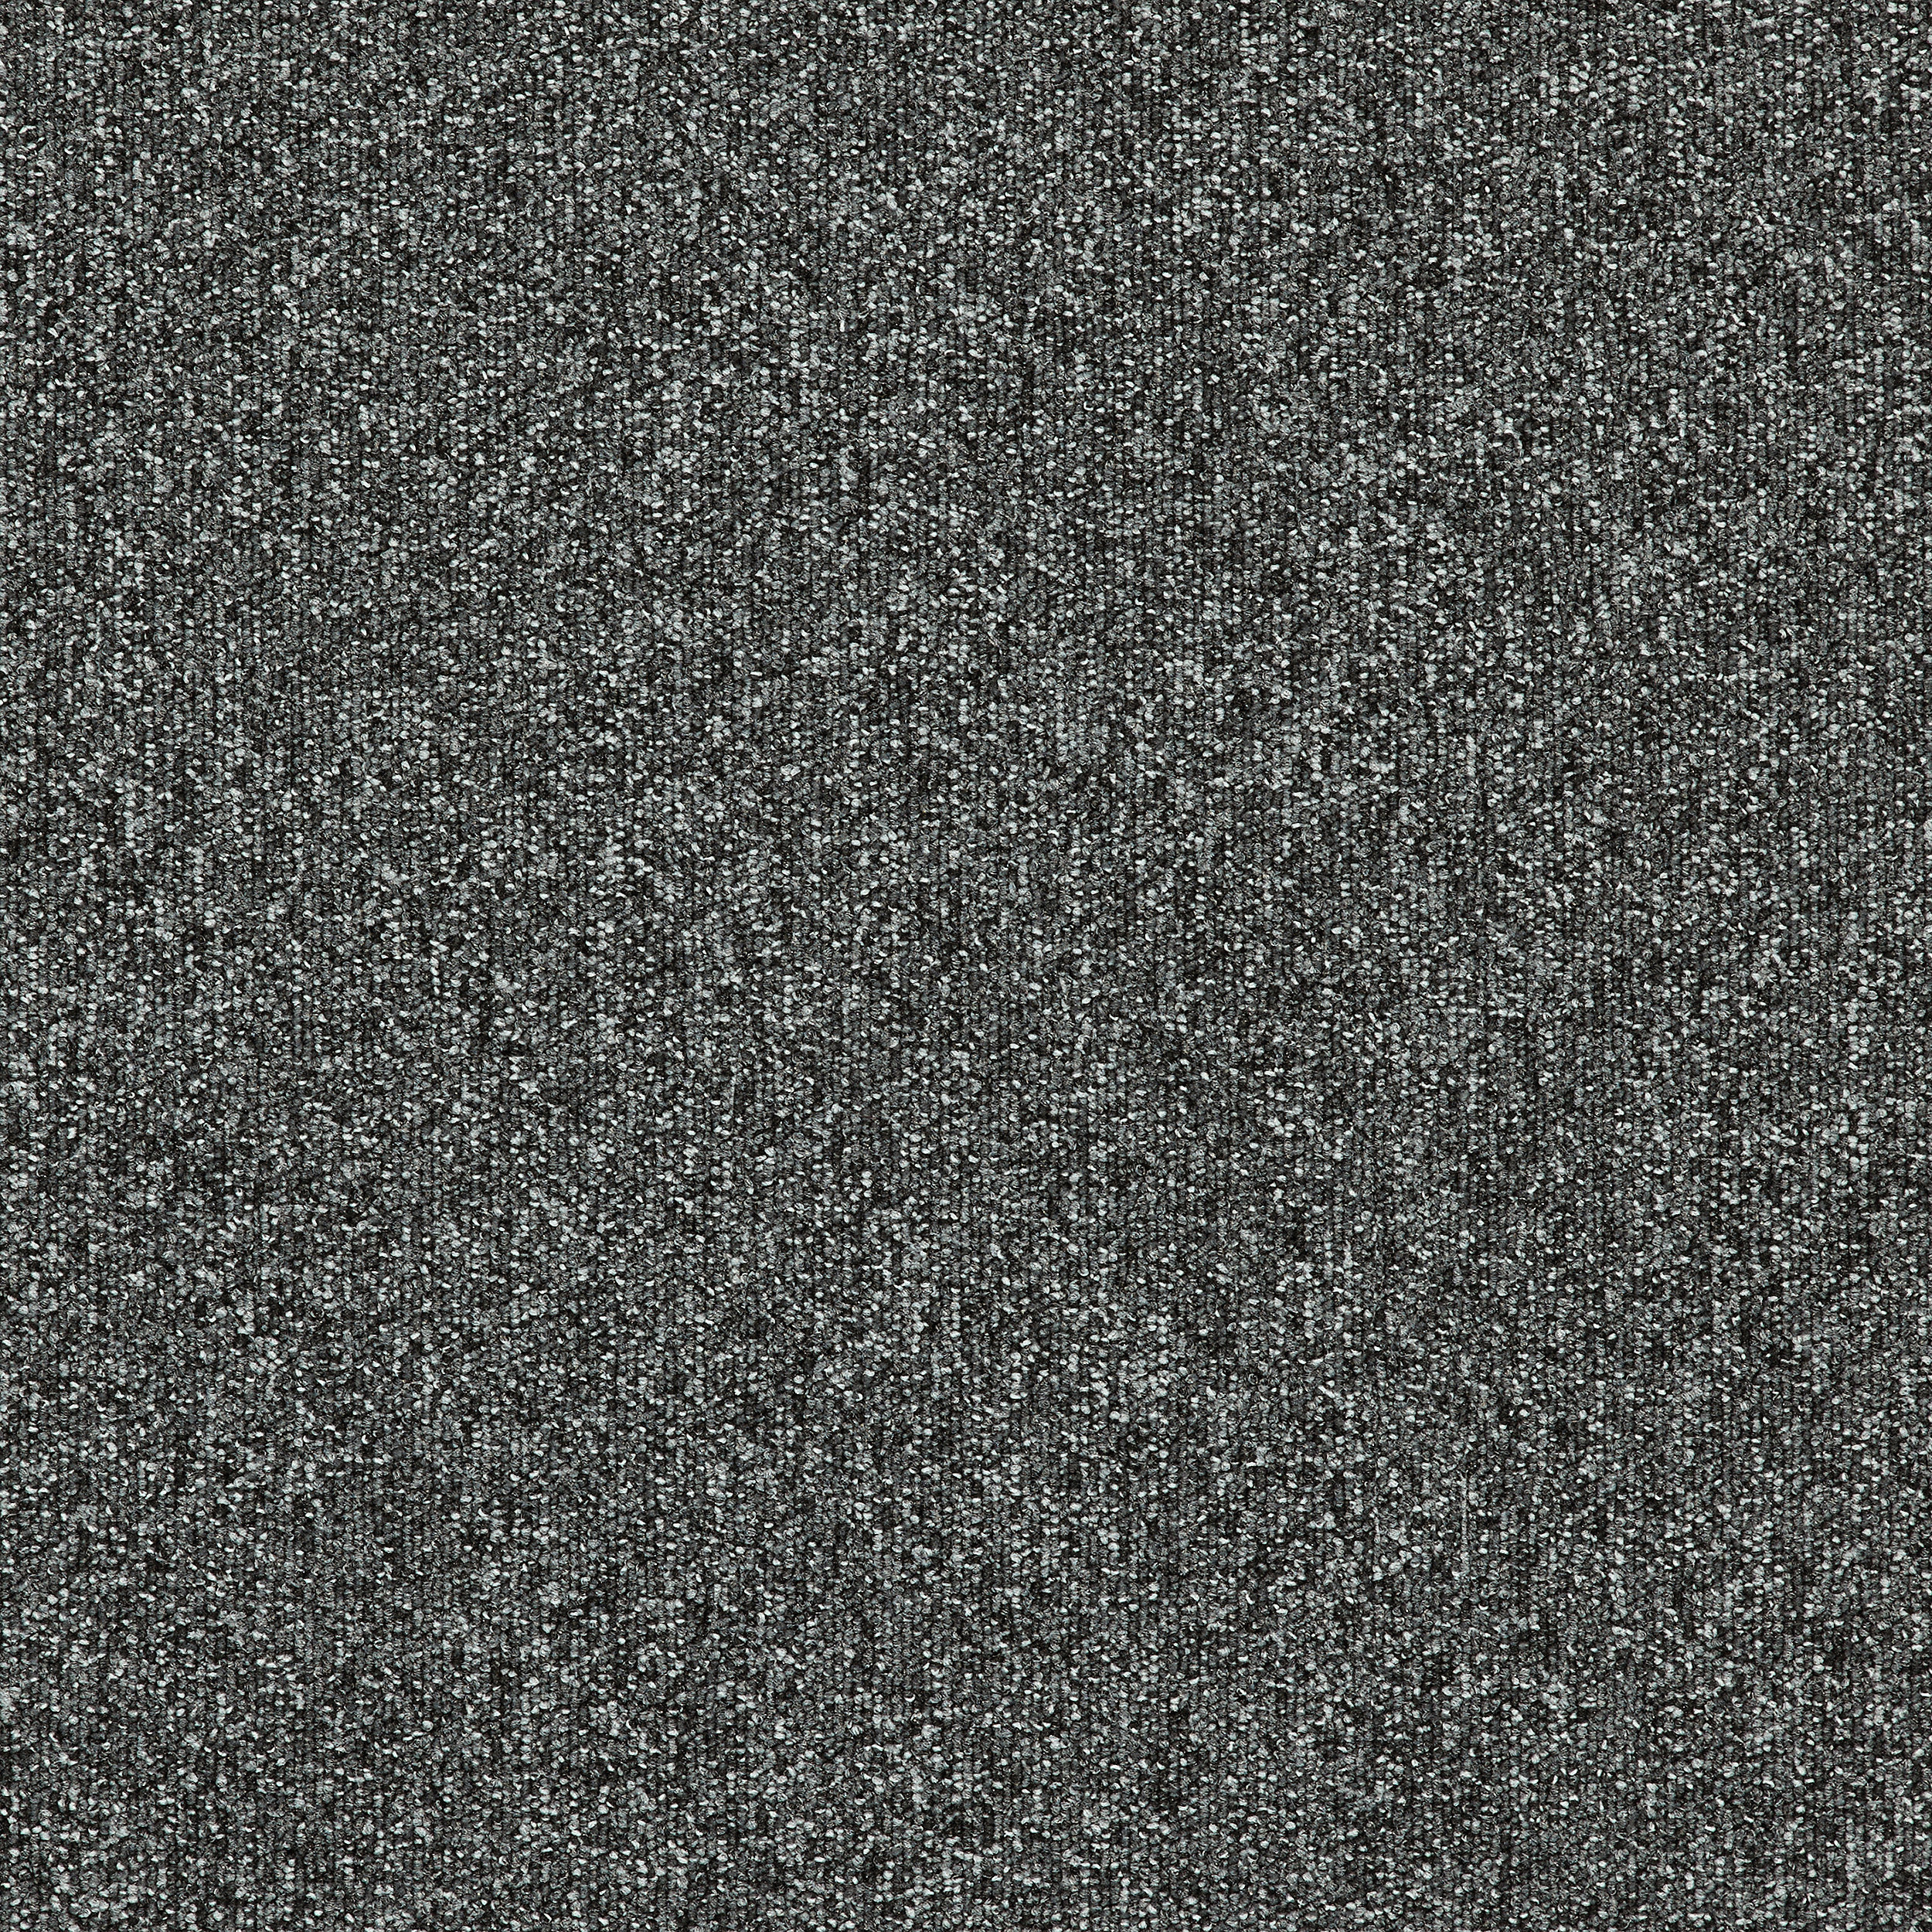 image Heuga 727 Carpet Tile In Graphite numéro 12